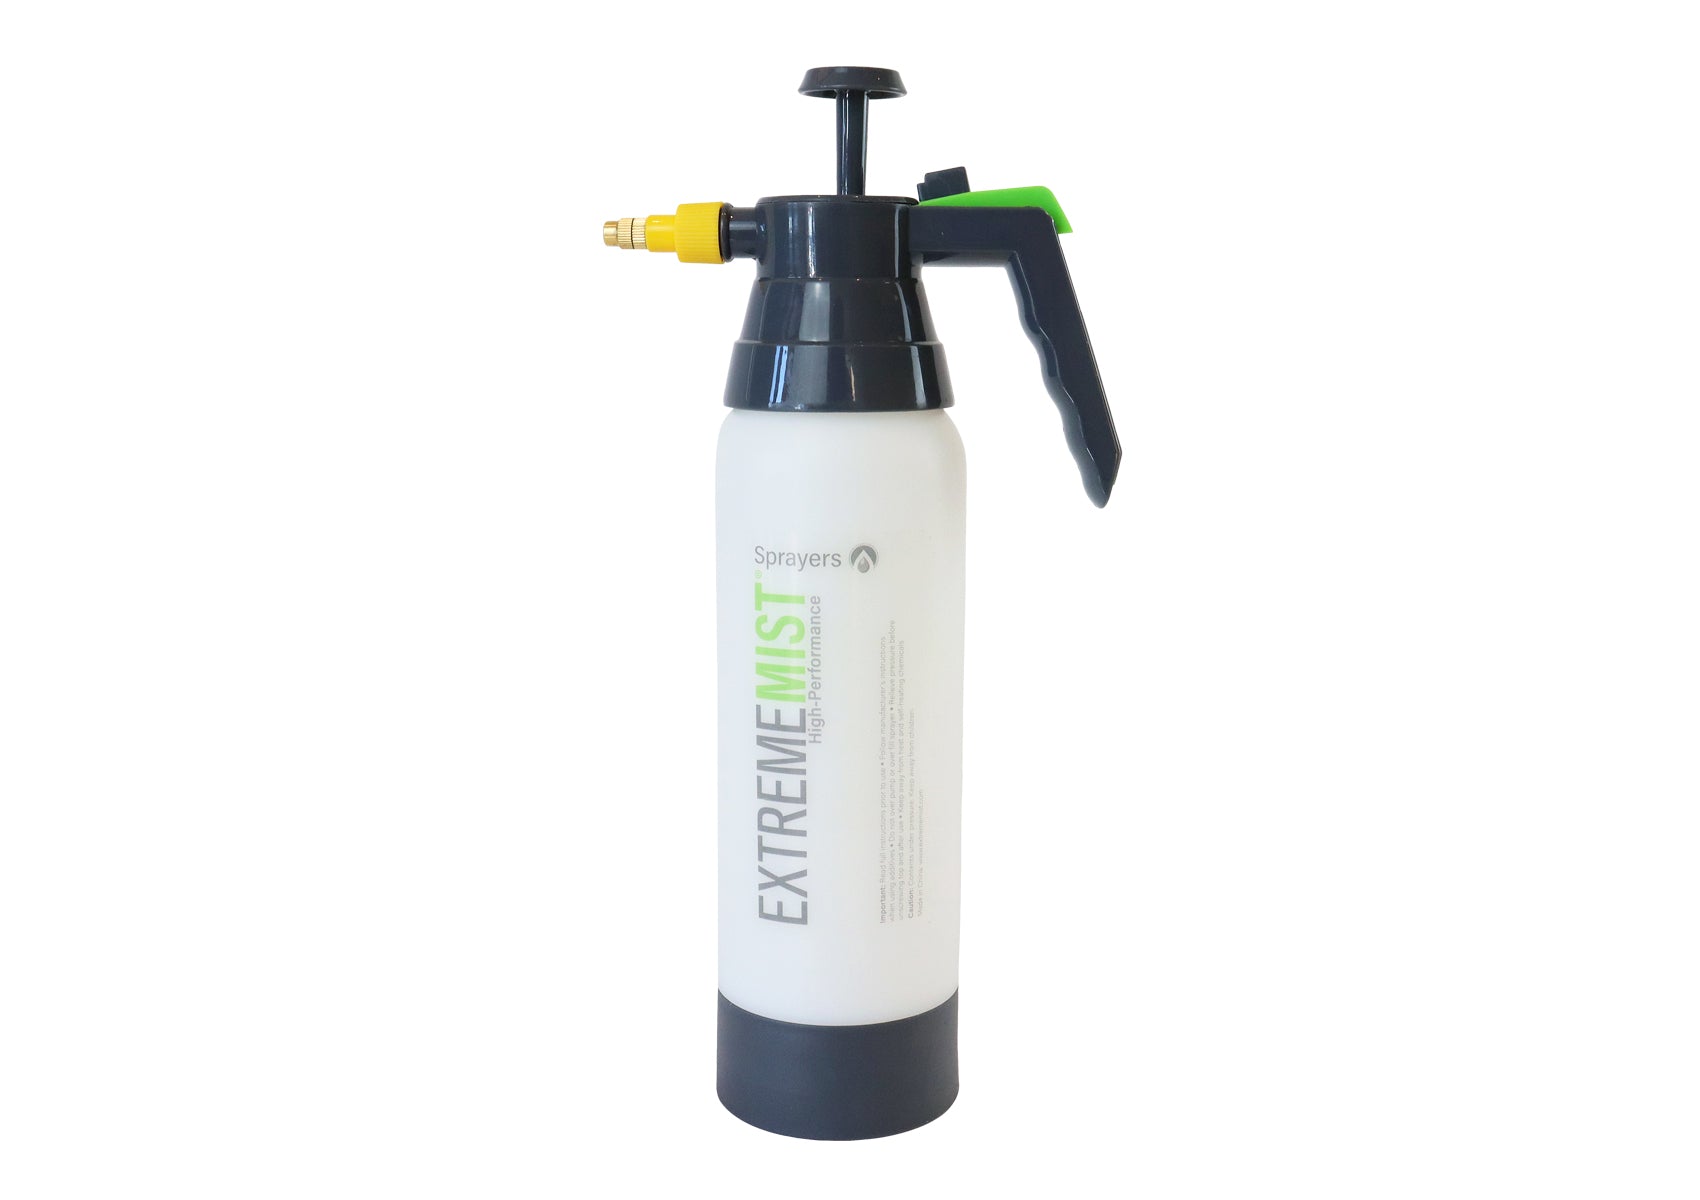 32oz high-performance sprayer